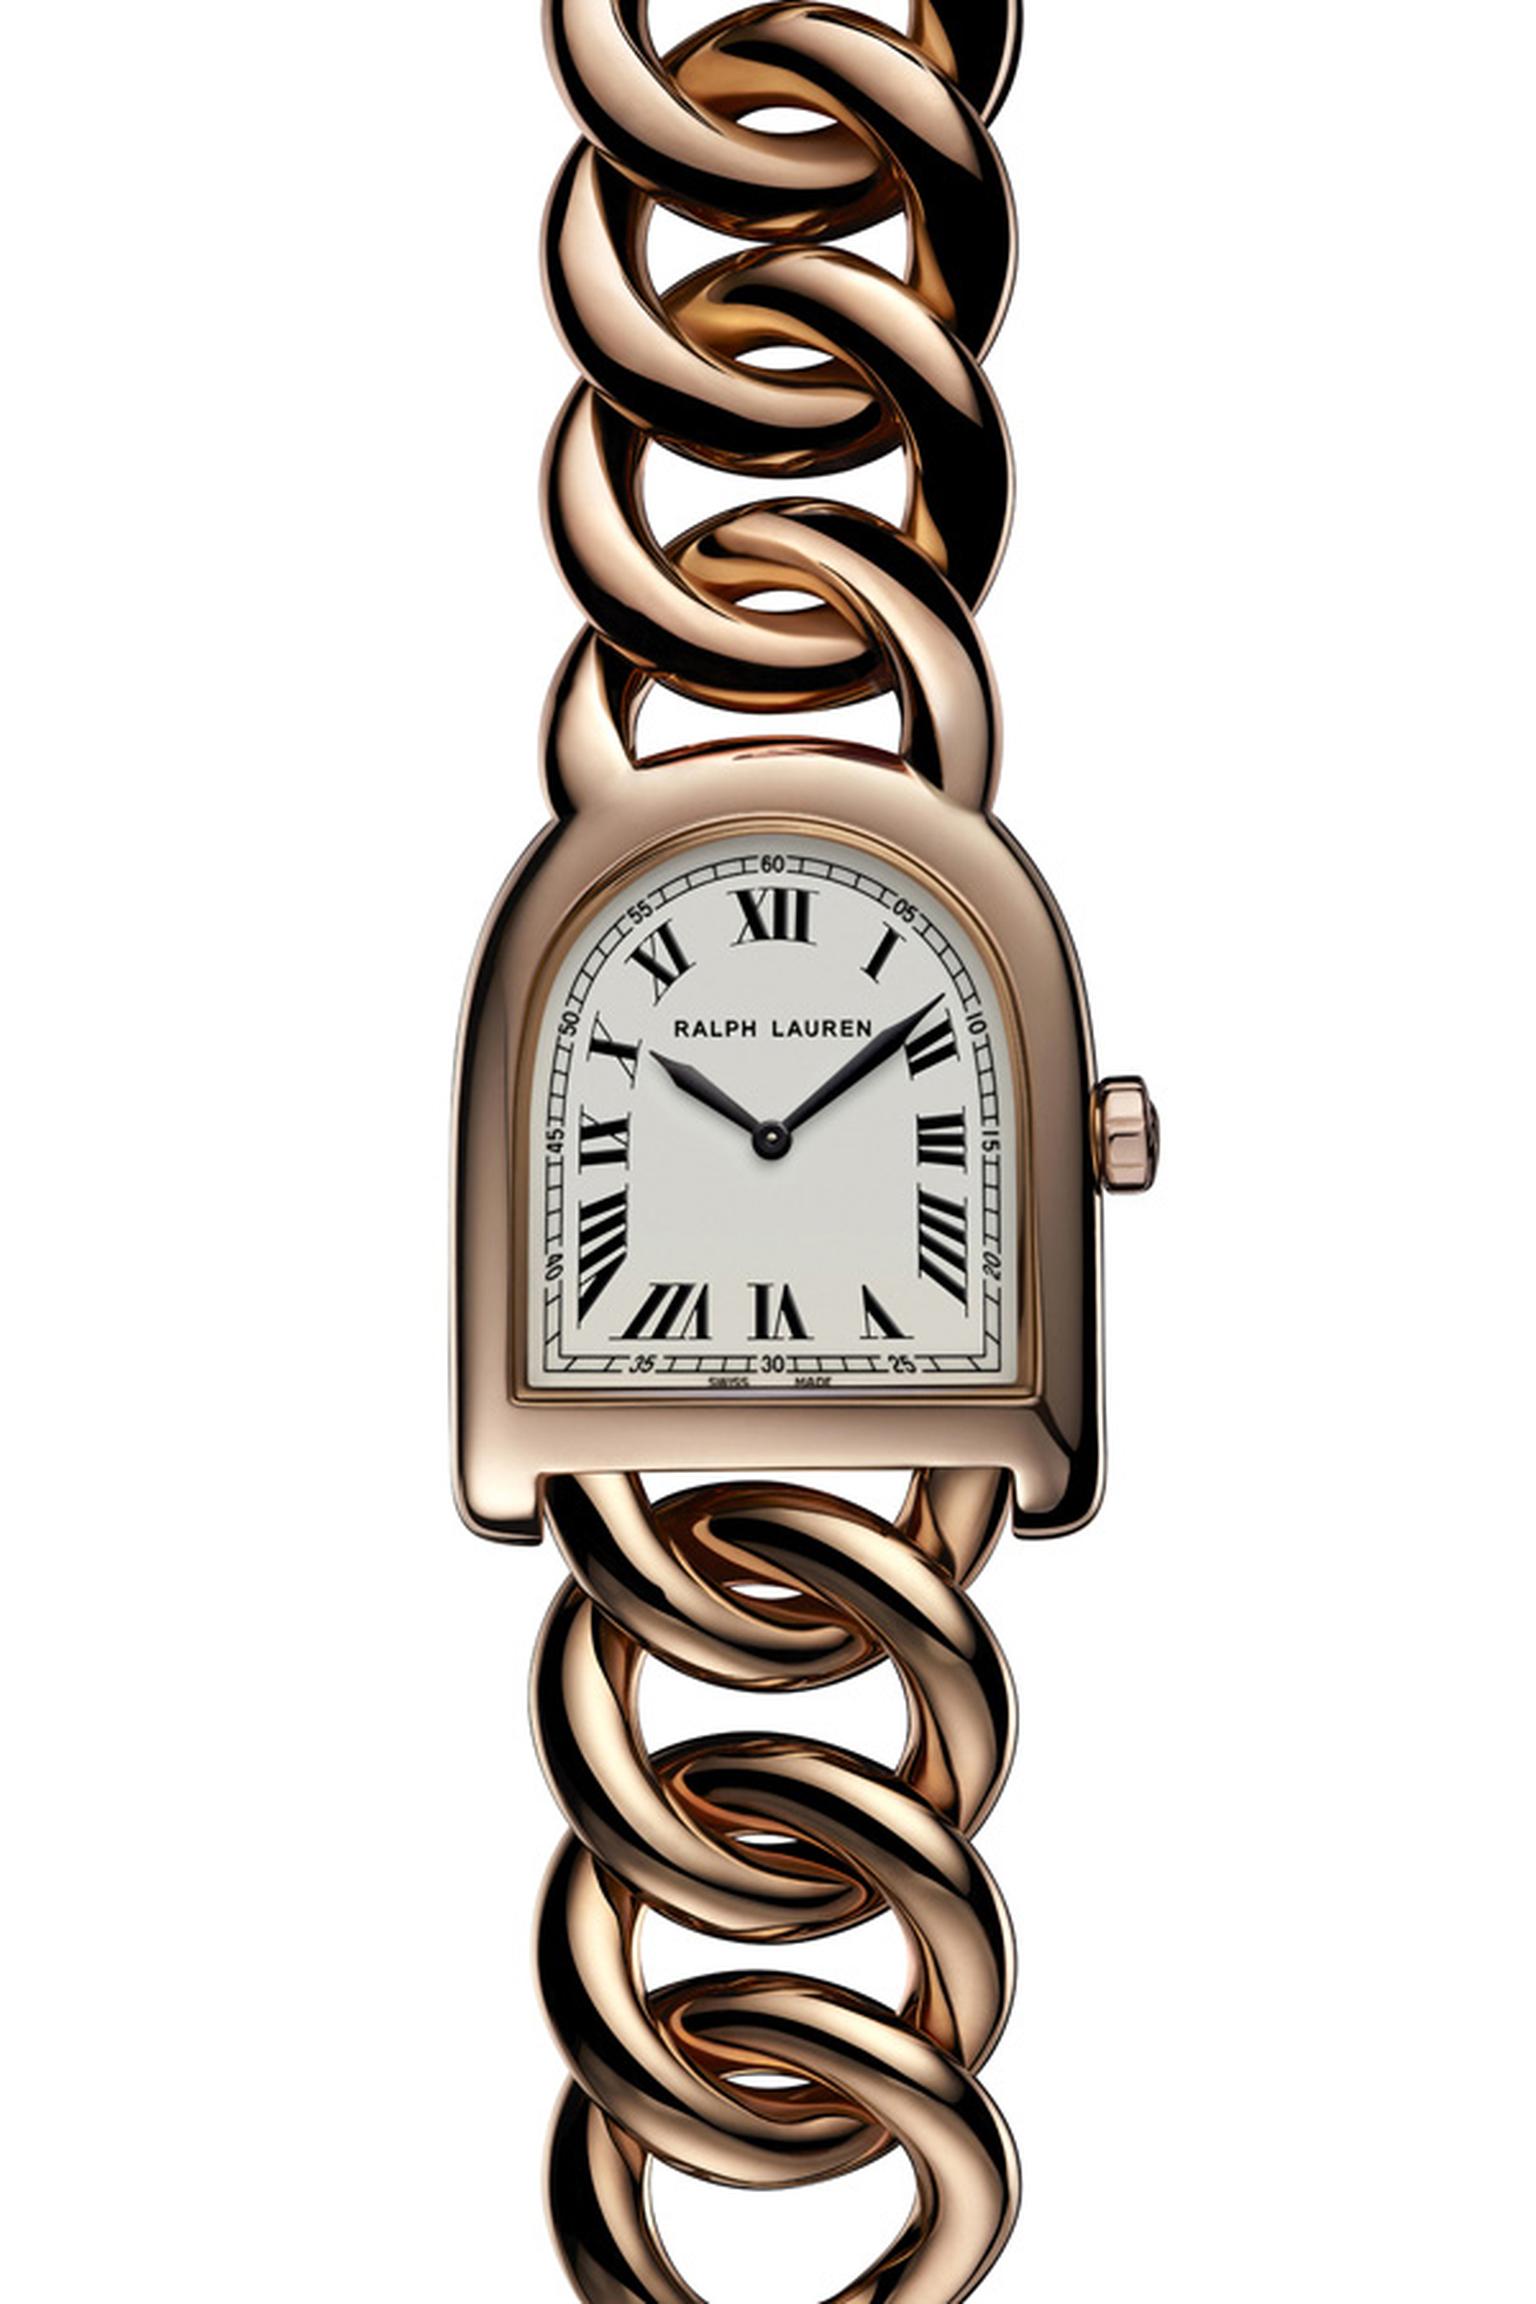 SIHH 2012 Ralph Lauren rose gold Stirrup bracelet watch